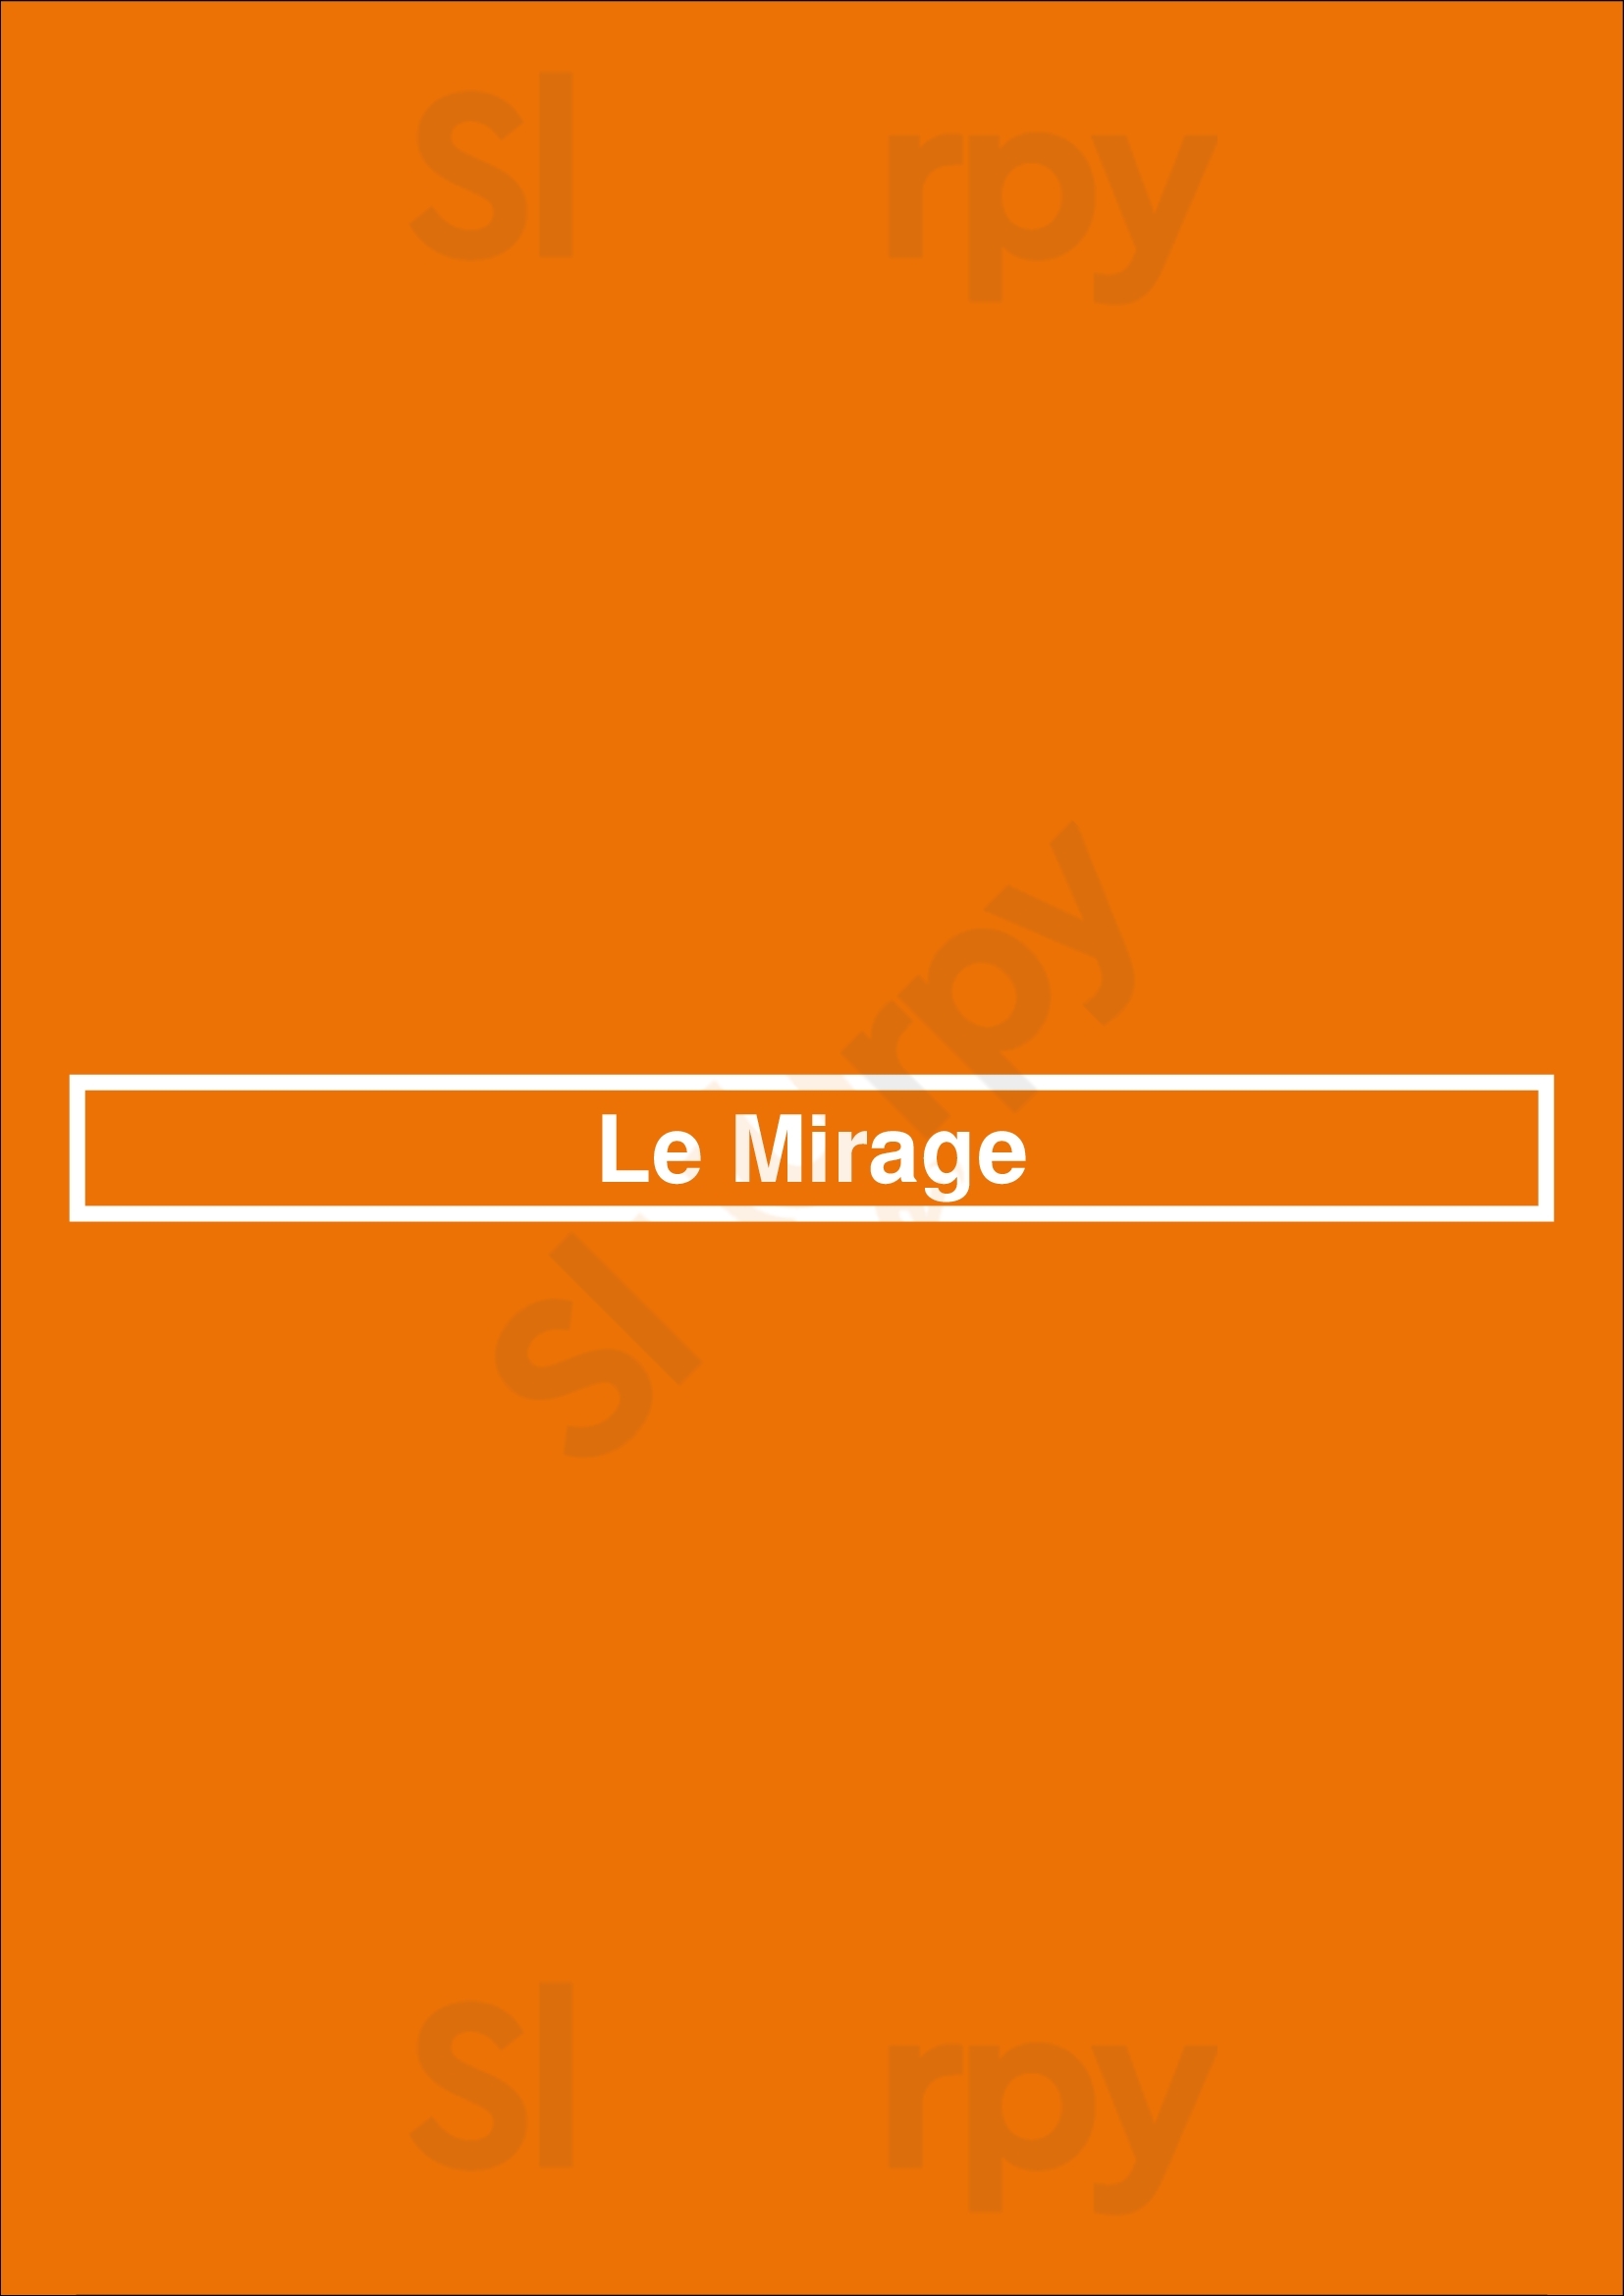 Le Mirage Emmeloord Menu - 1